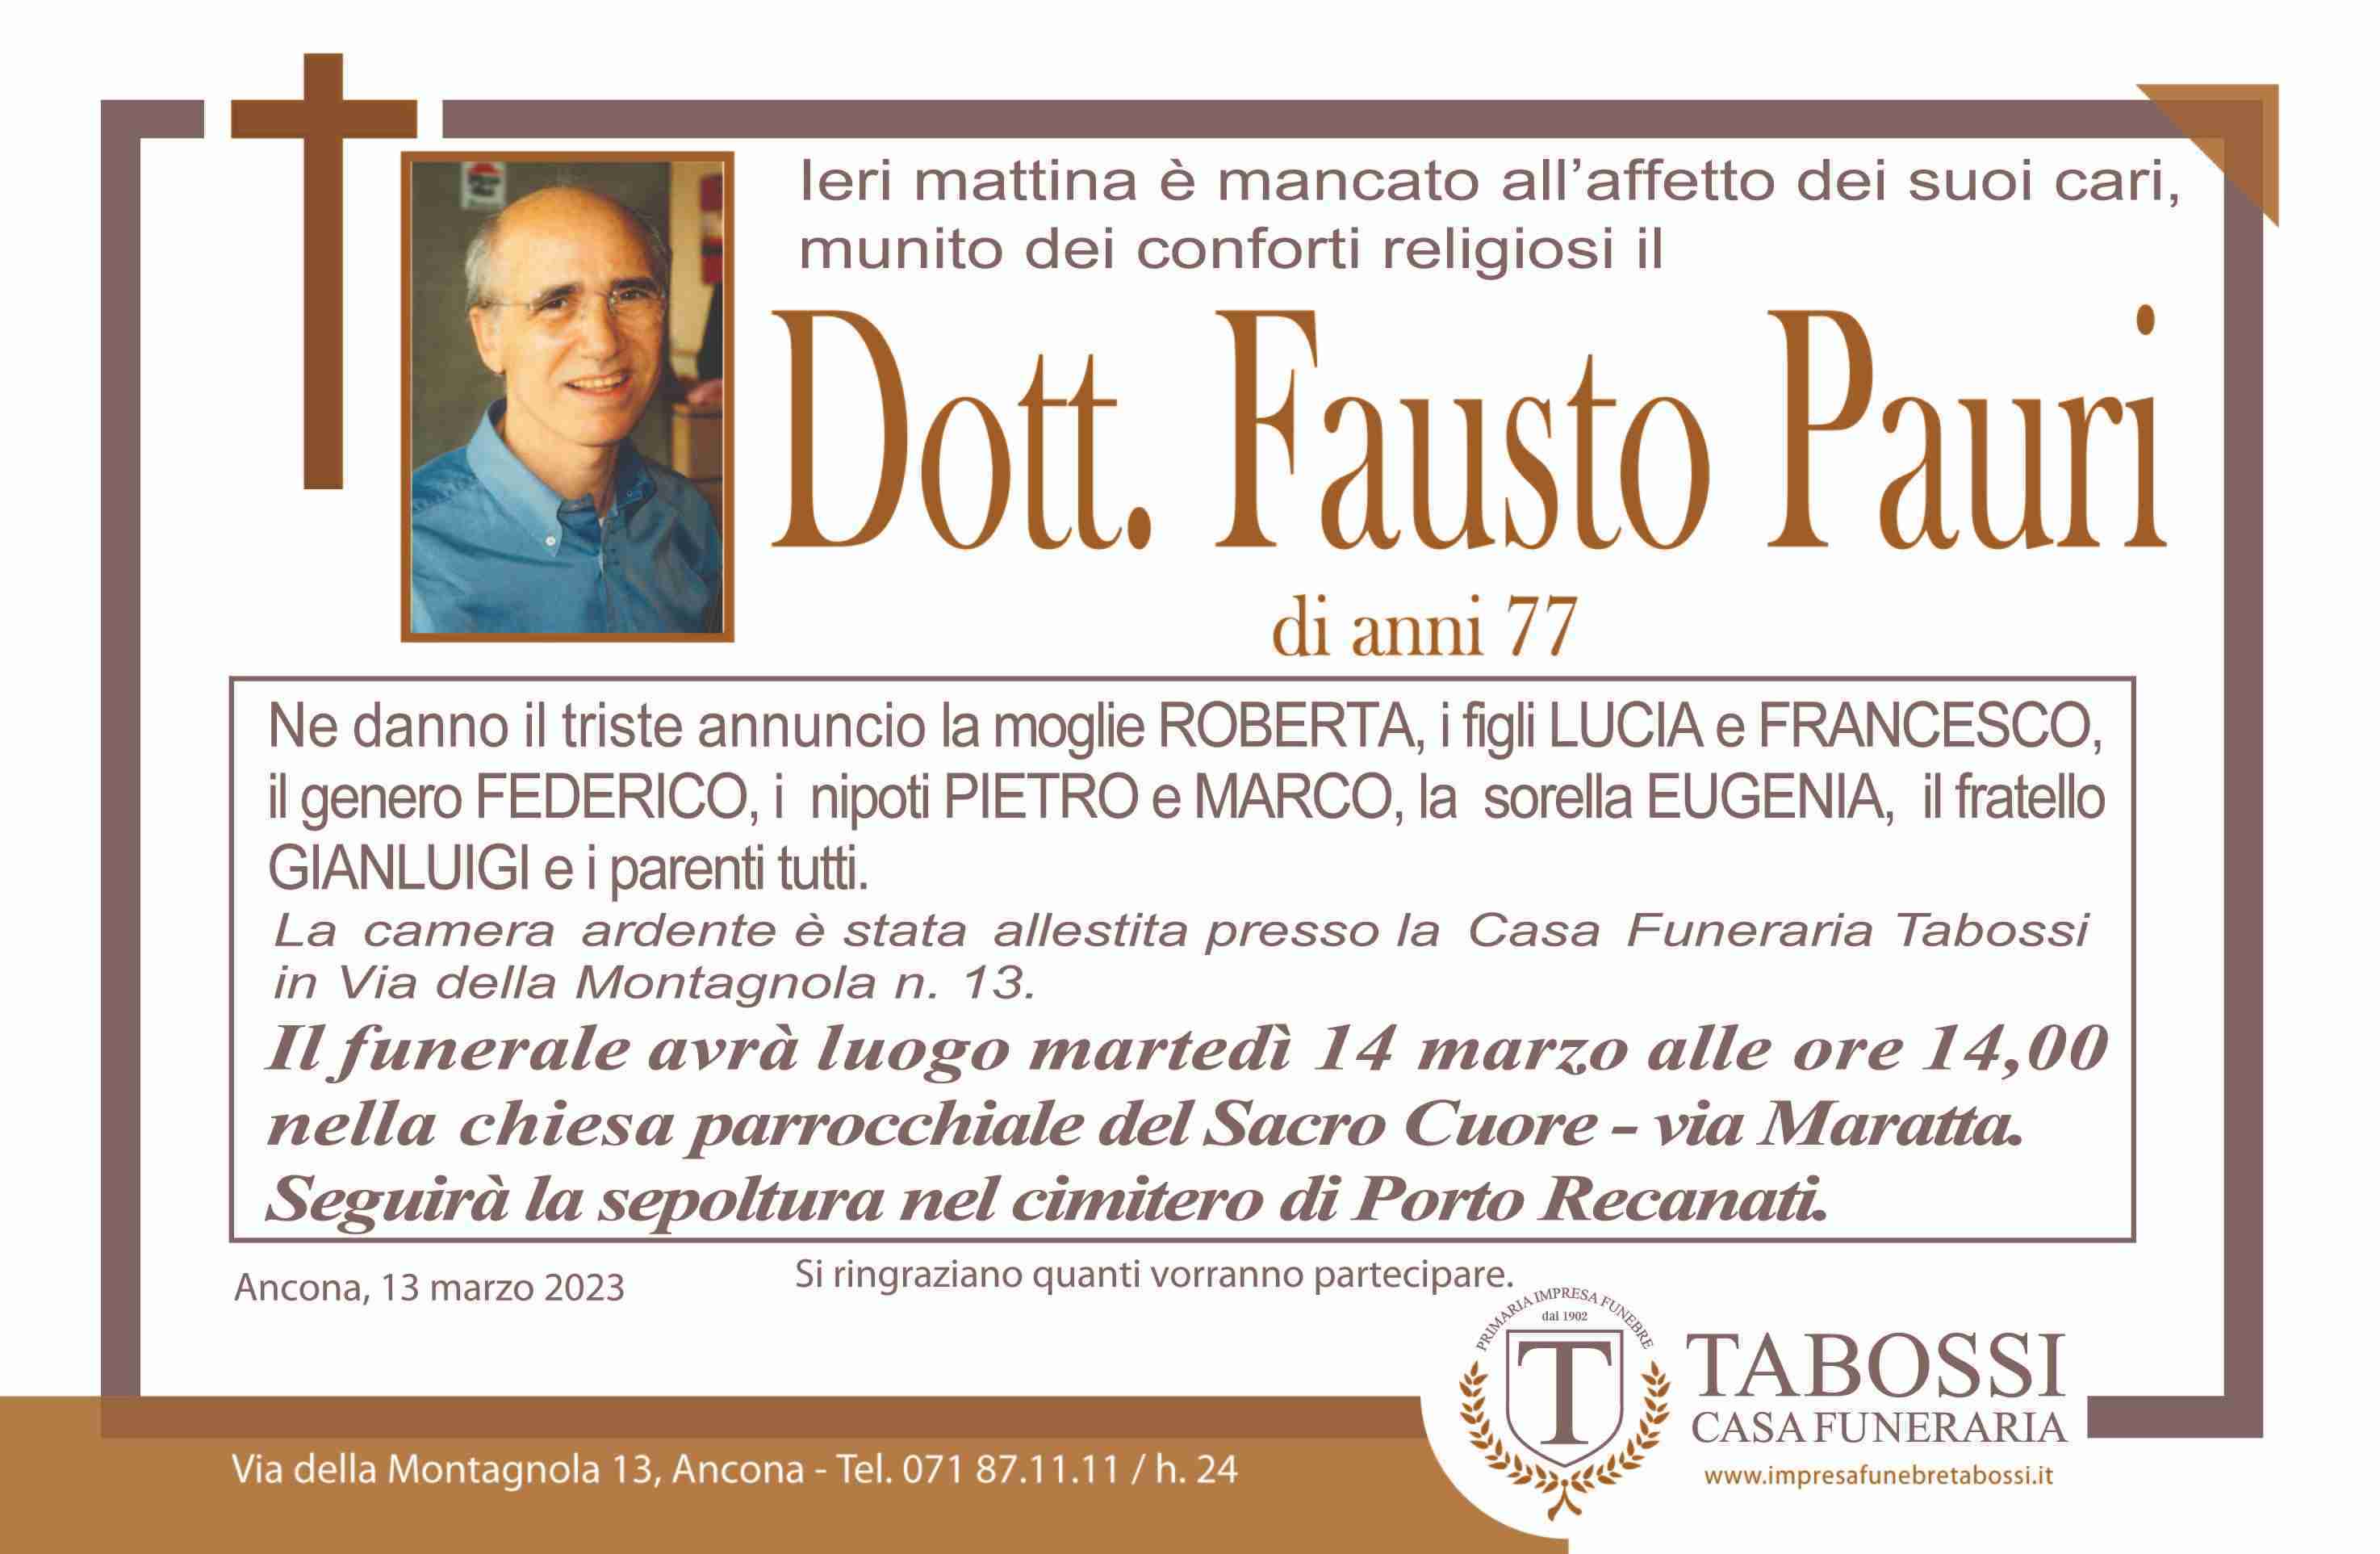 Fausto Pauri